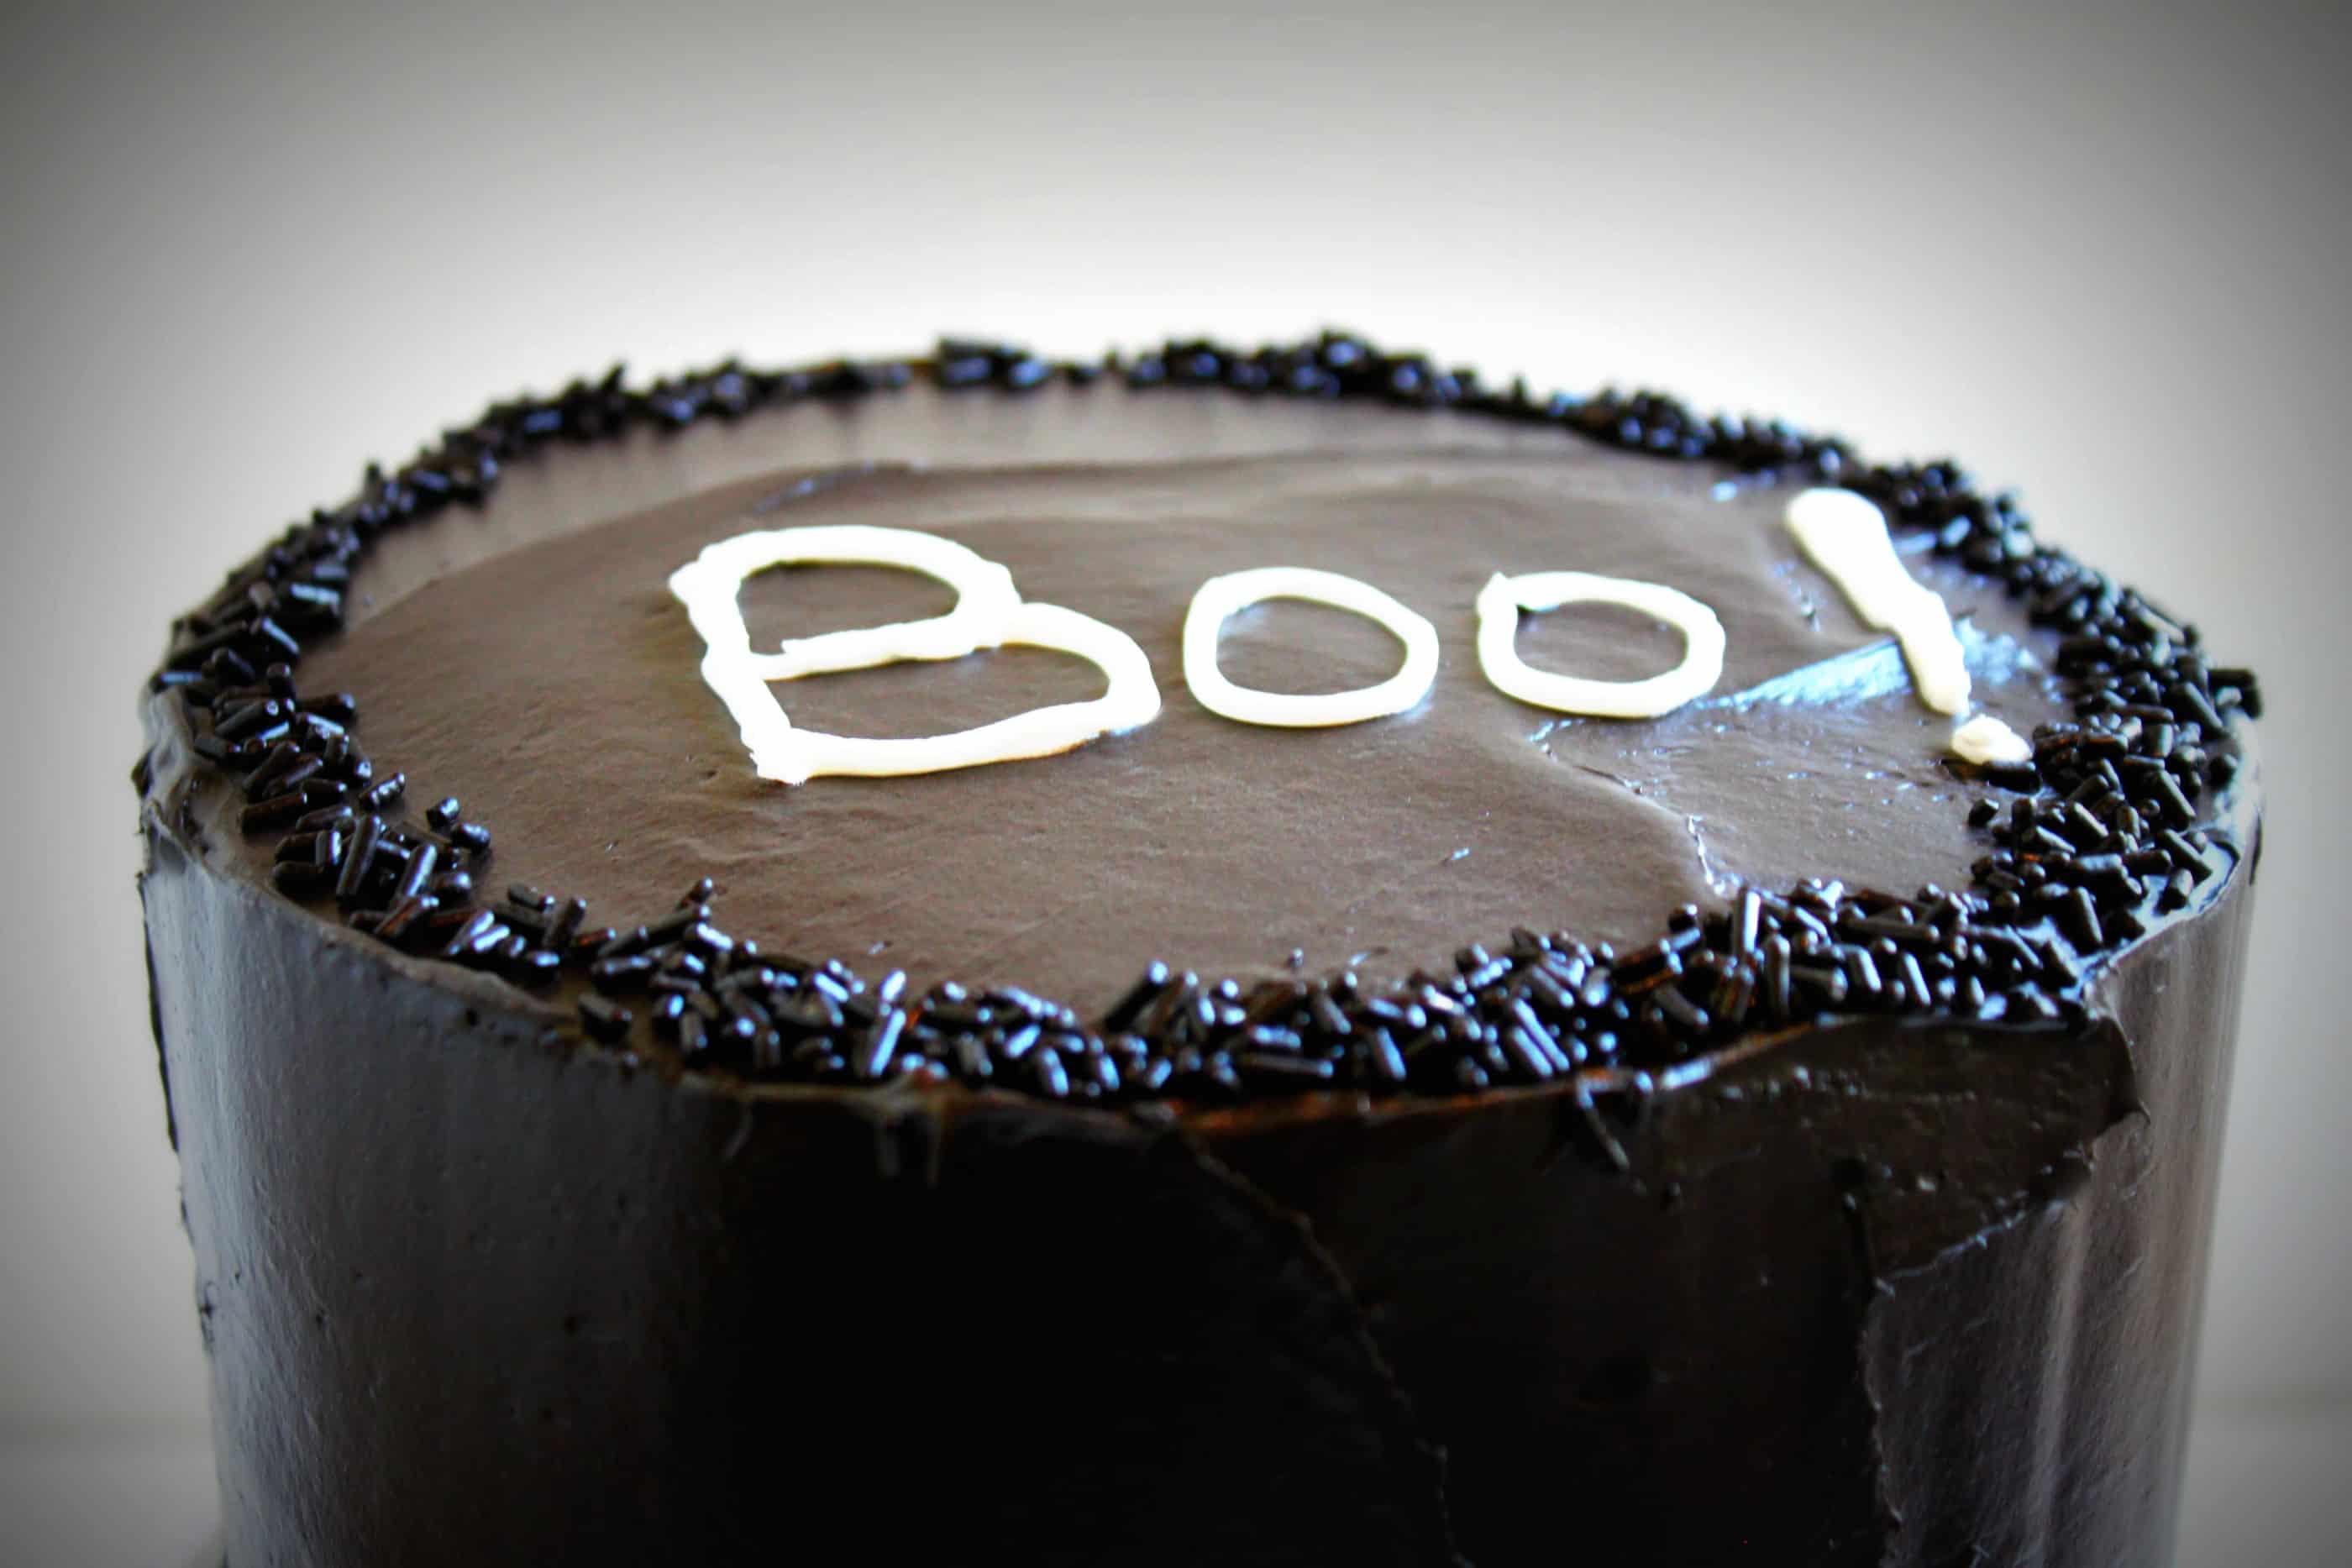 Halloween Boo! Cake